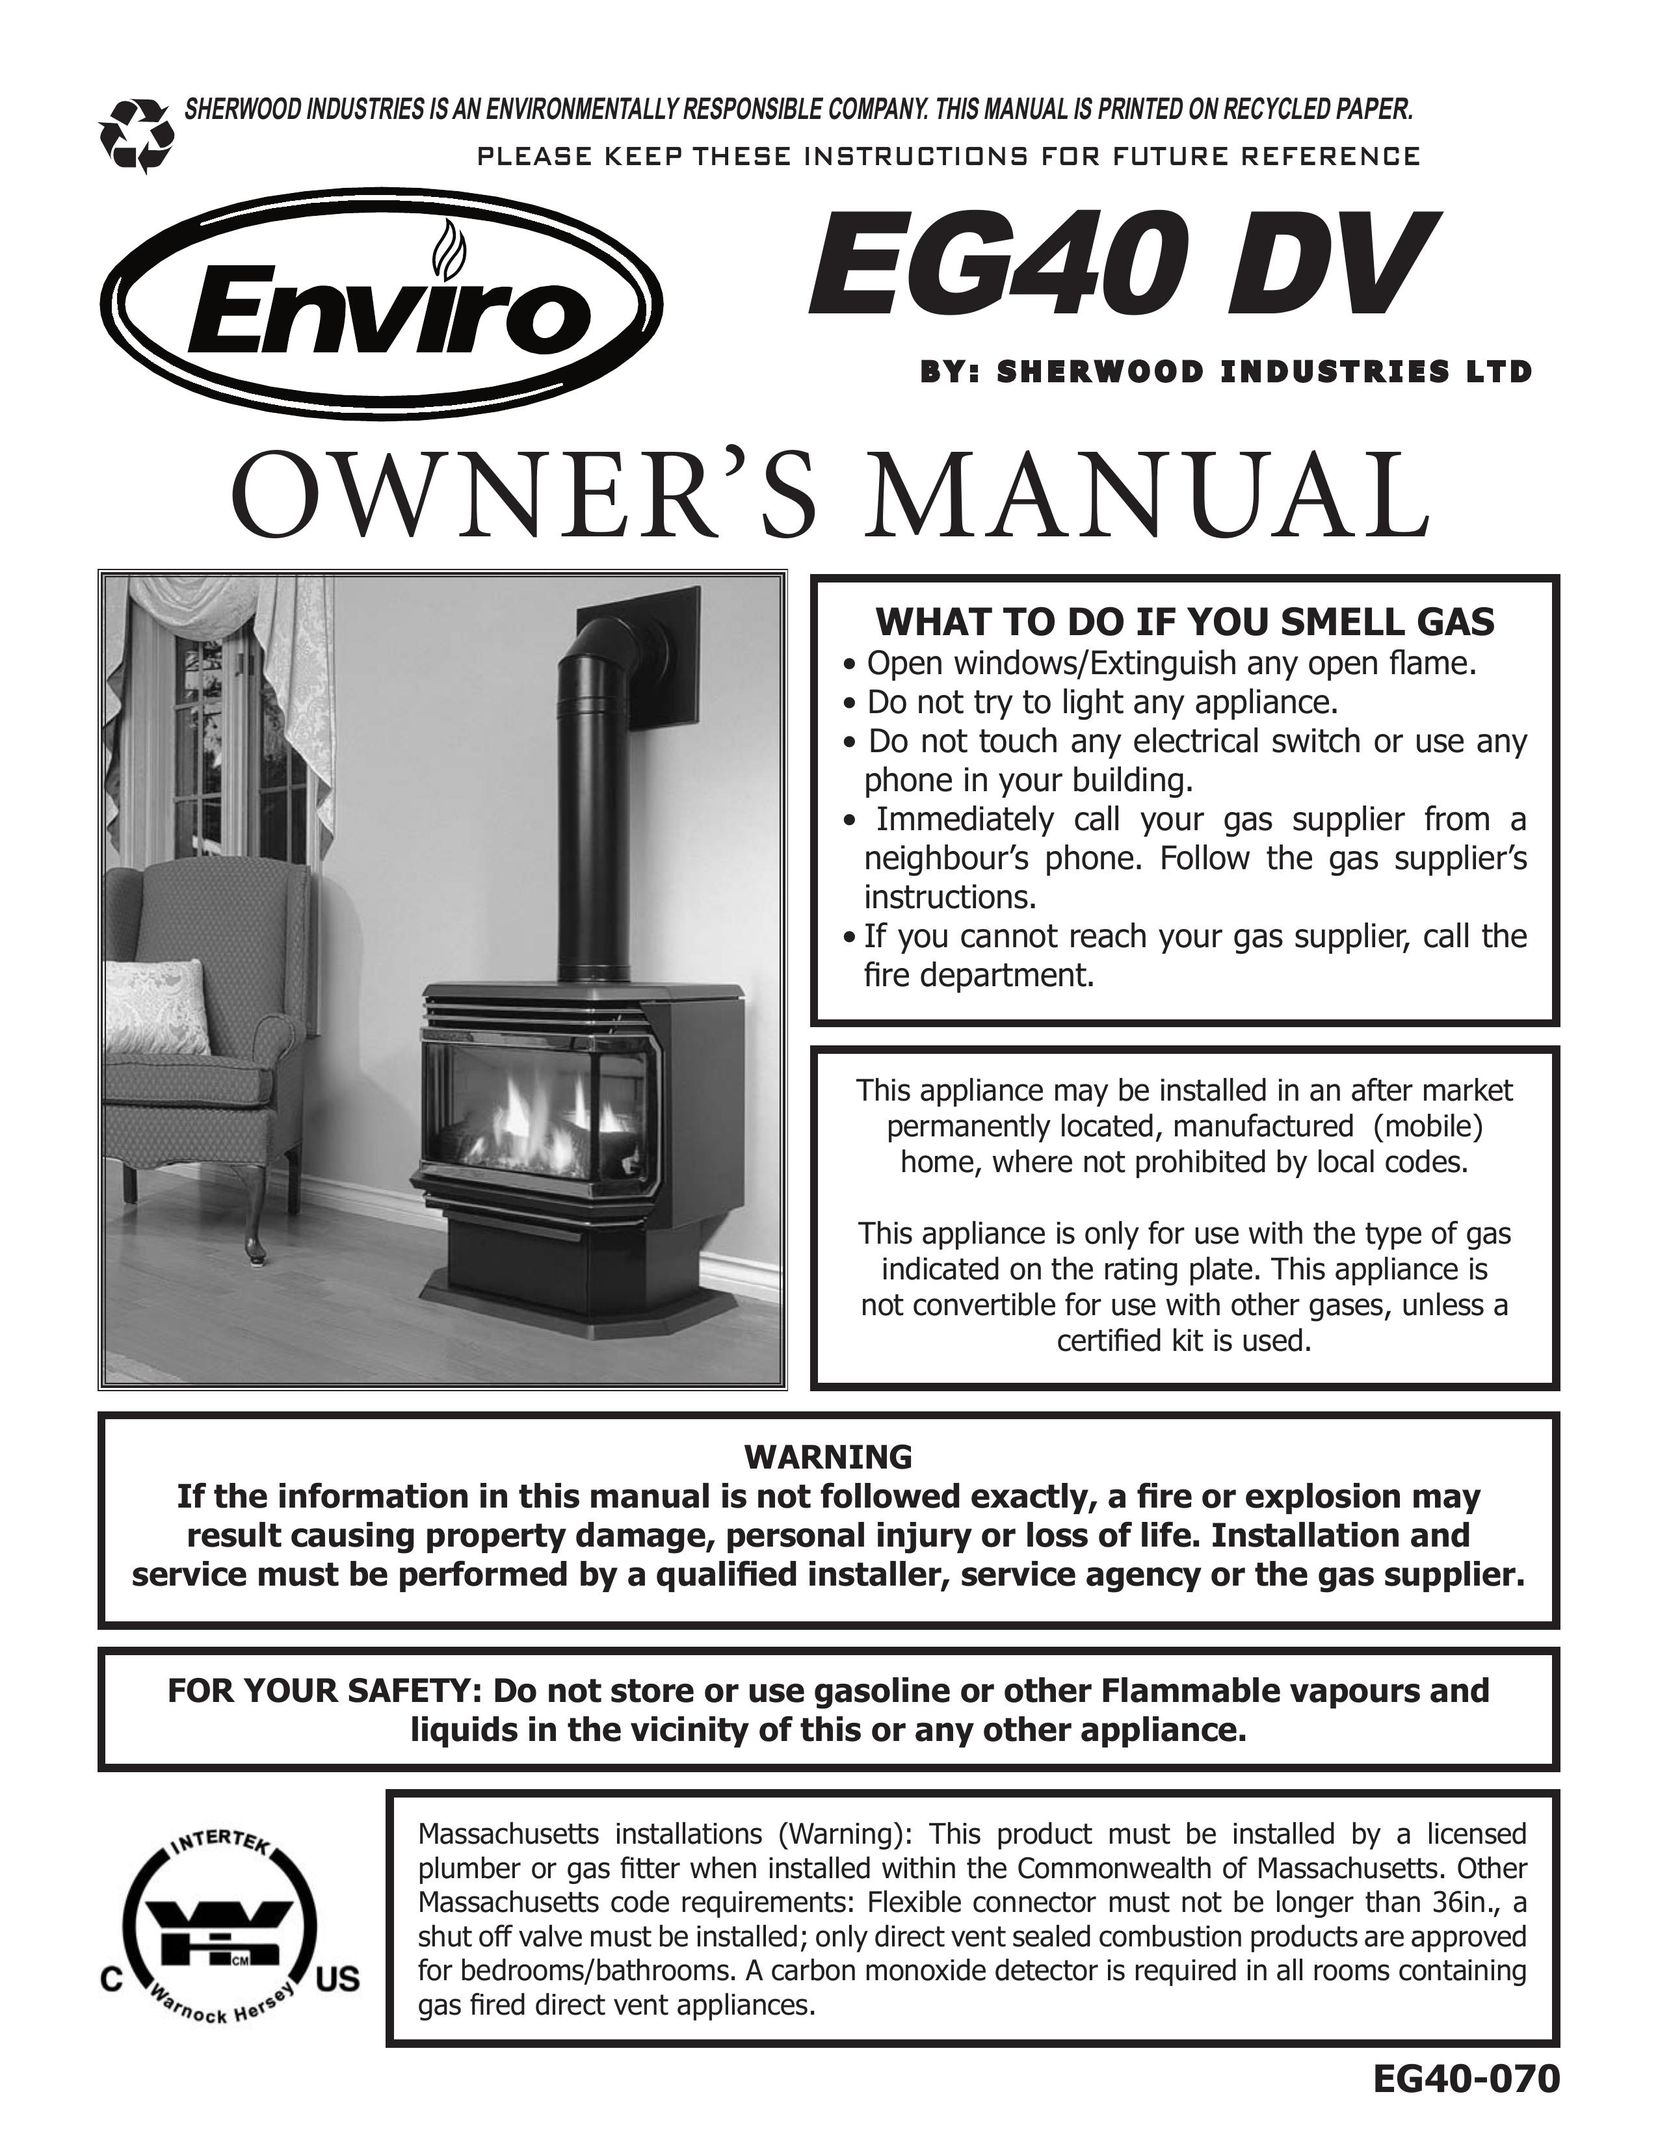 Sherwood EG40 DV Stove User Manual